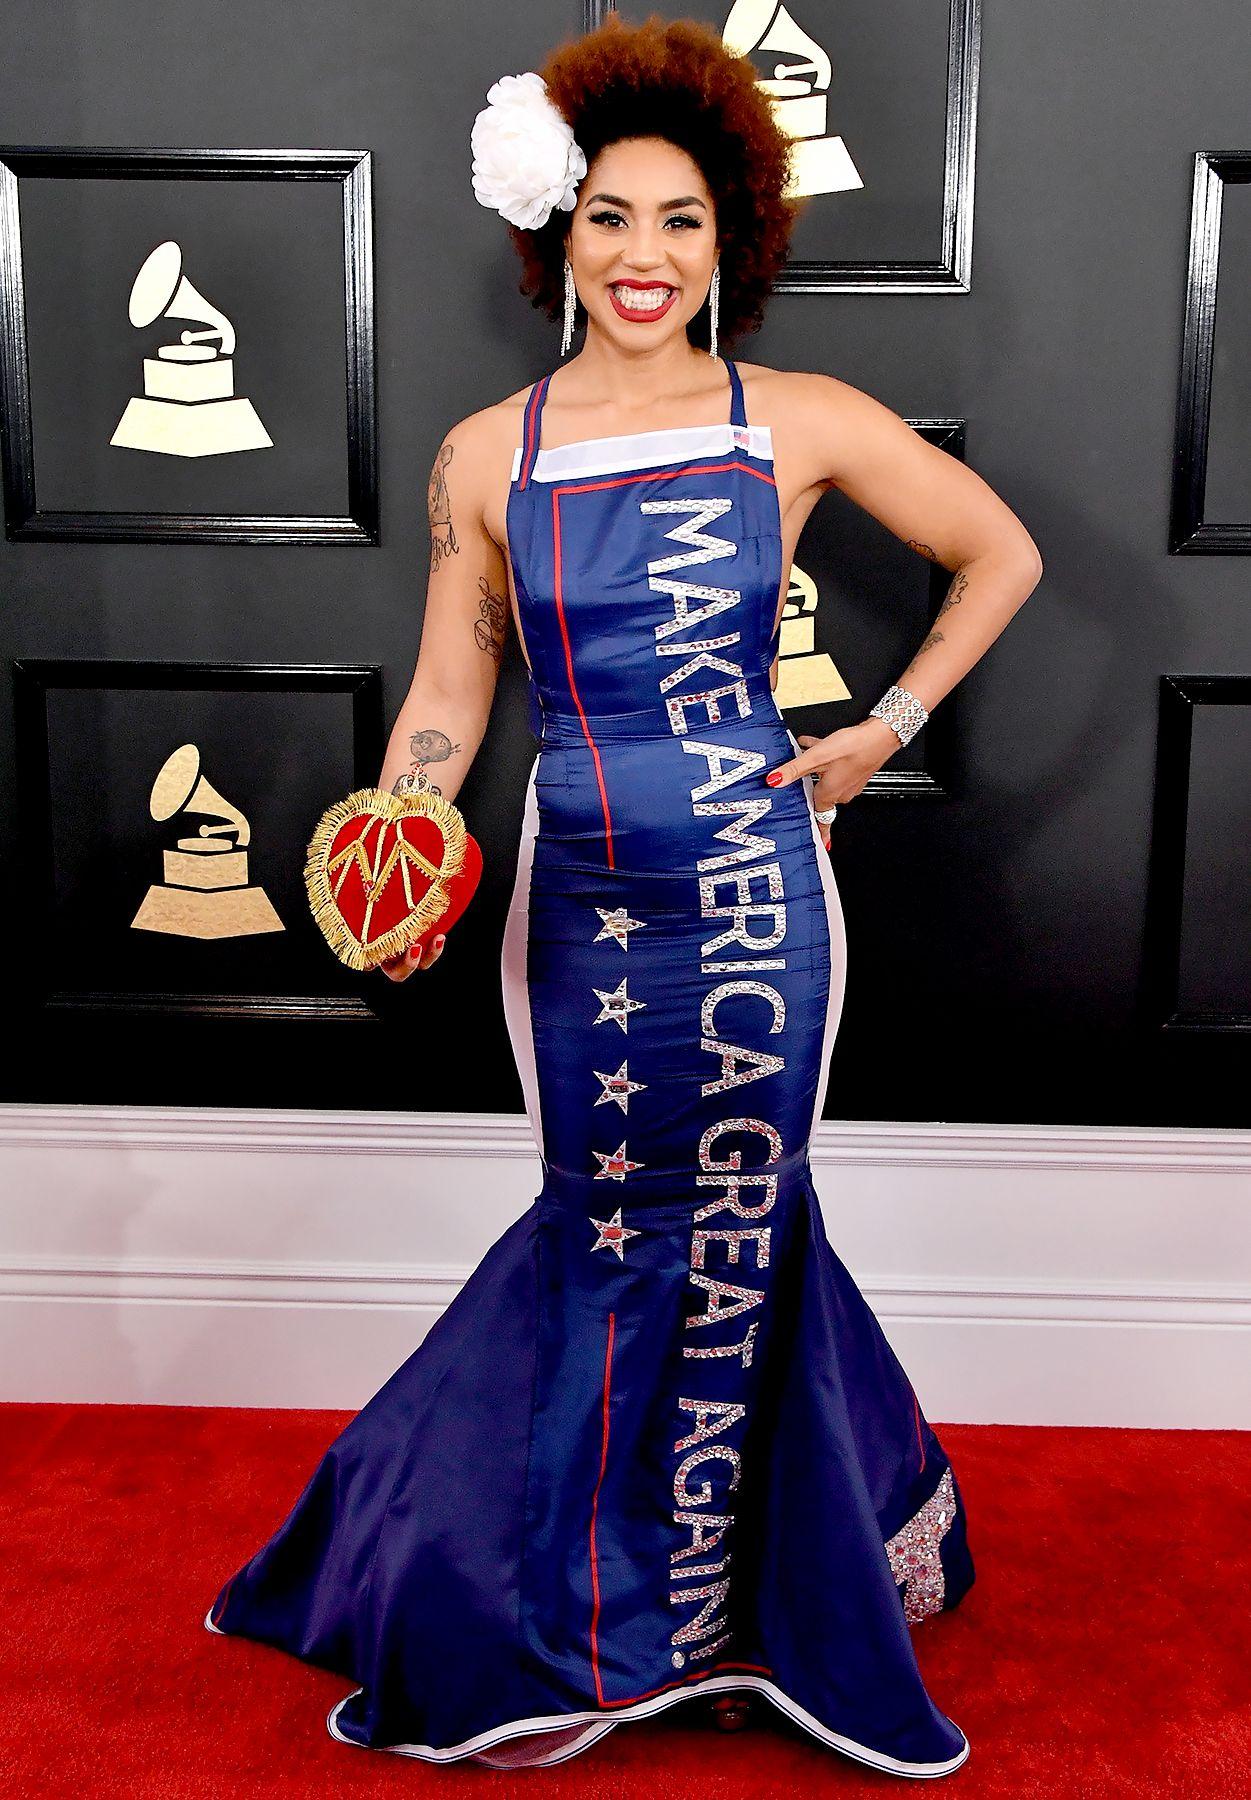 Grammys 2017: Singer Wears Make America Great Again Dress